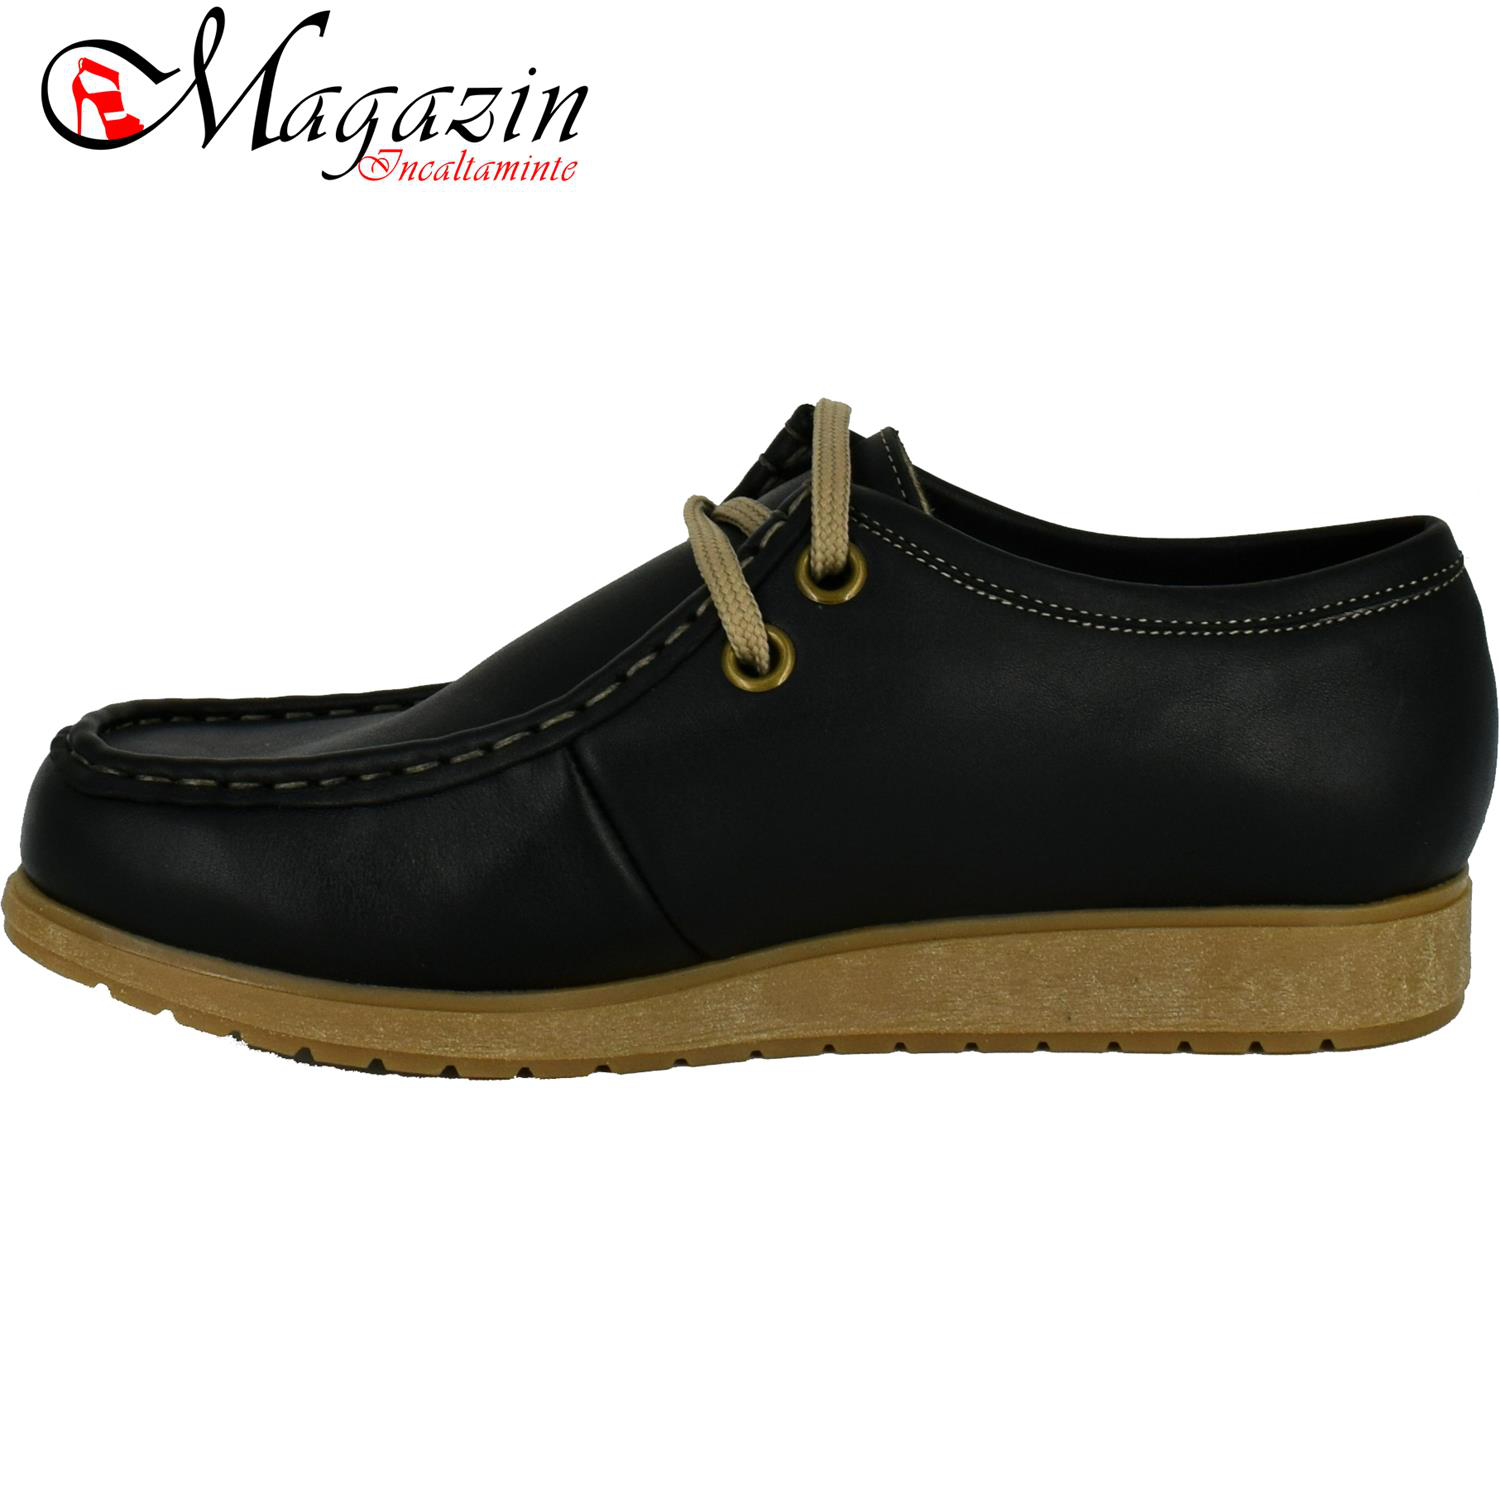 Pantofi Dama Piele Naturala - Prego - 101 Negru